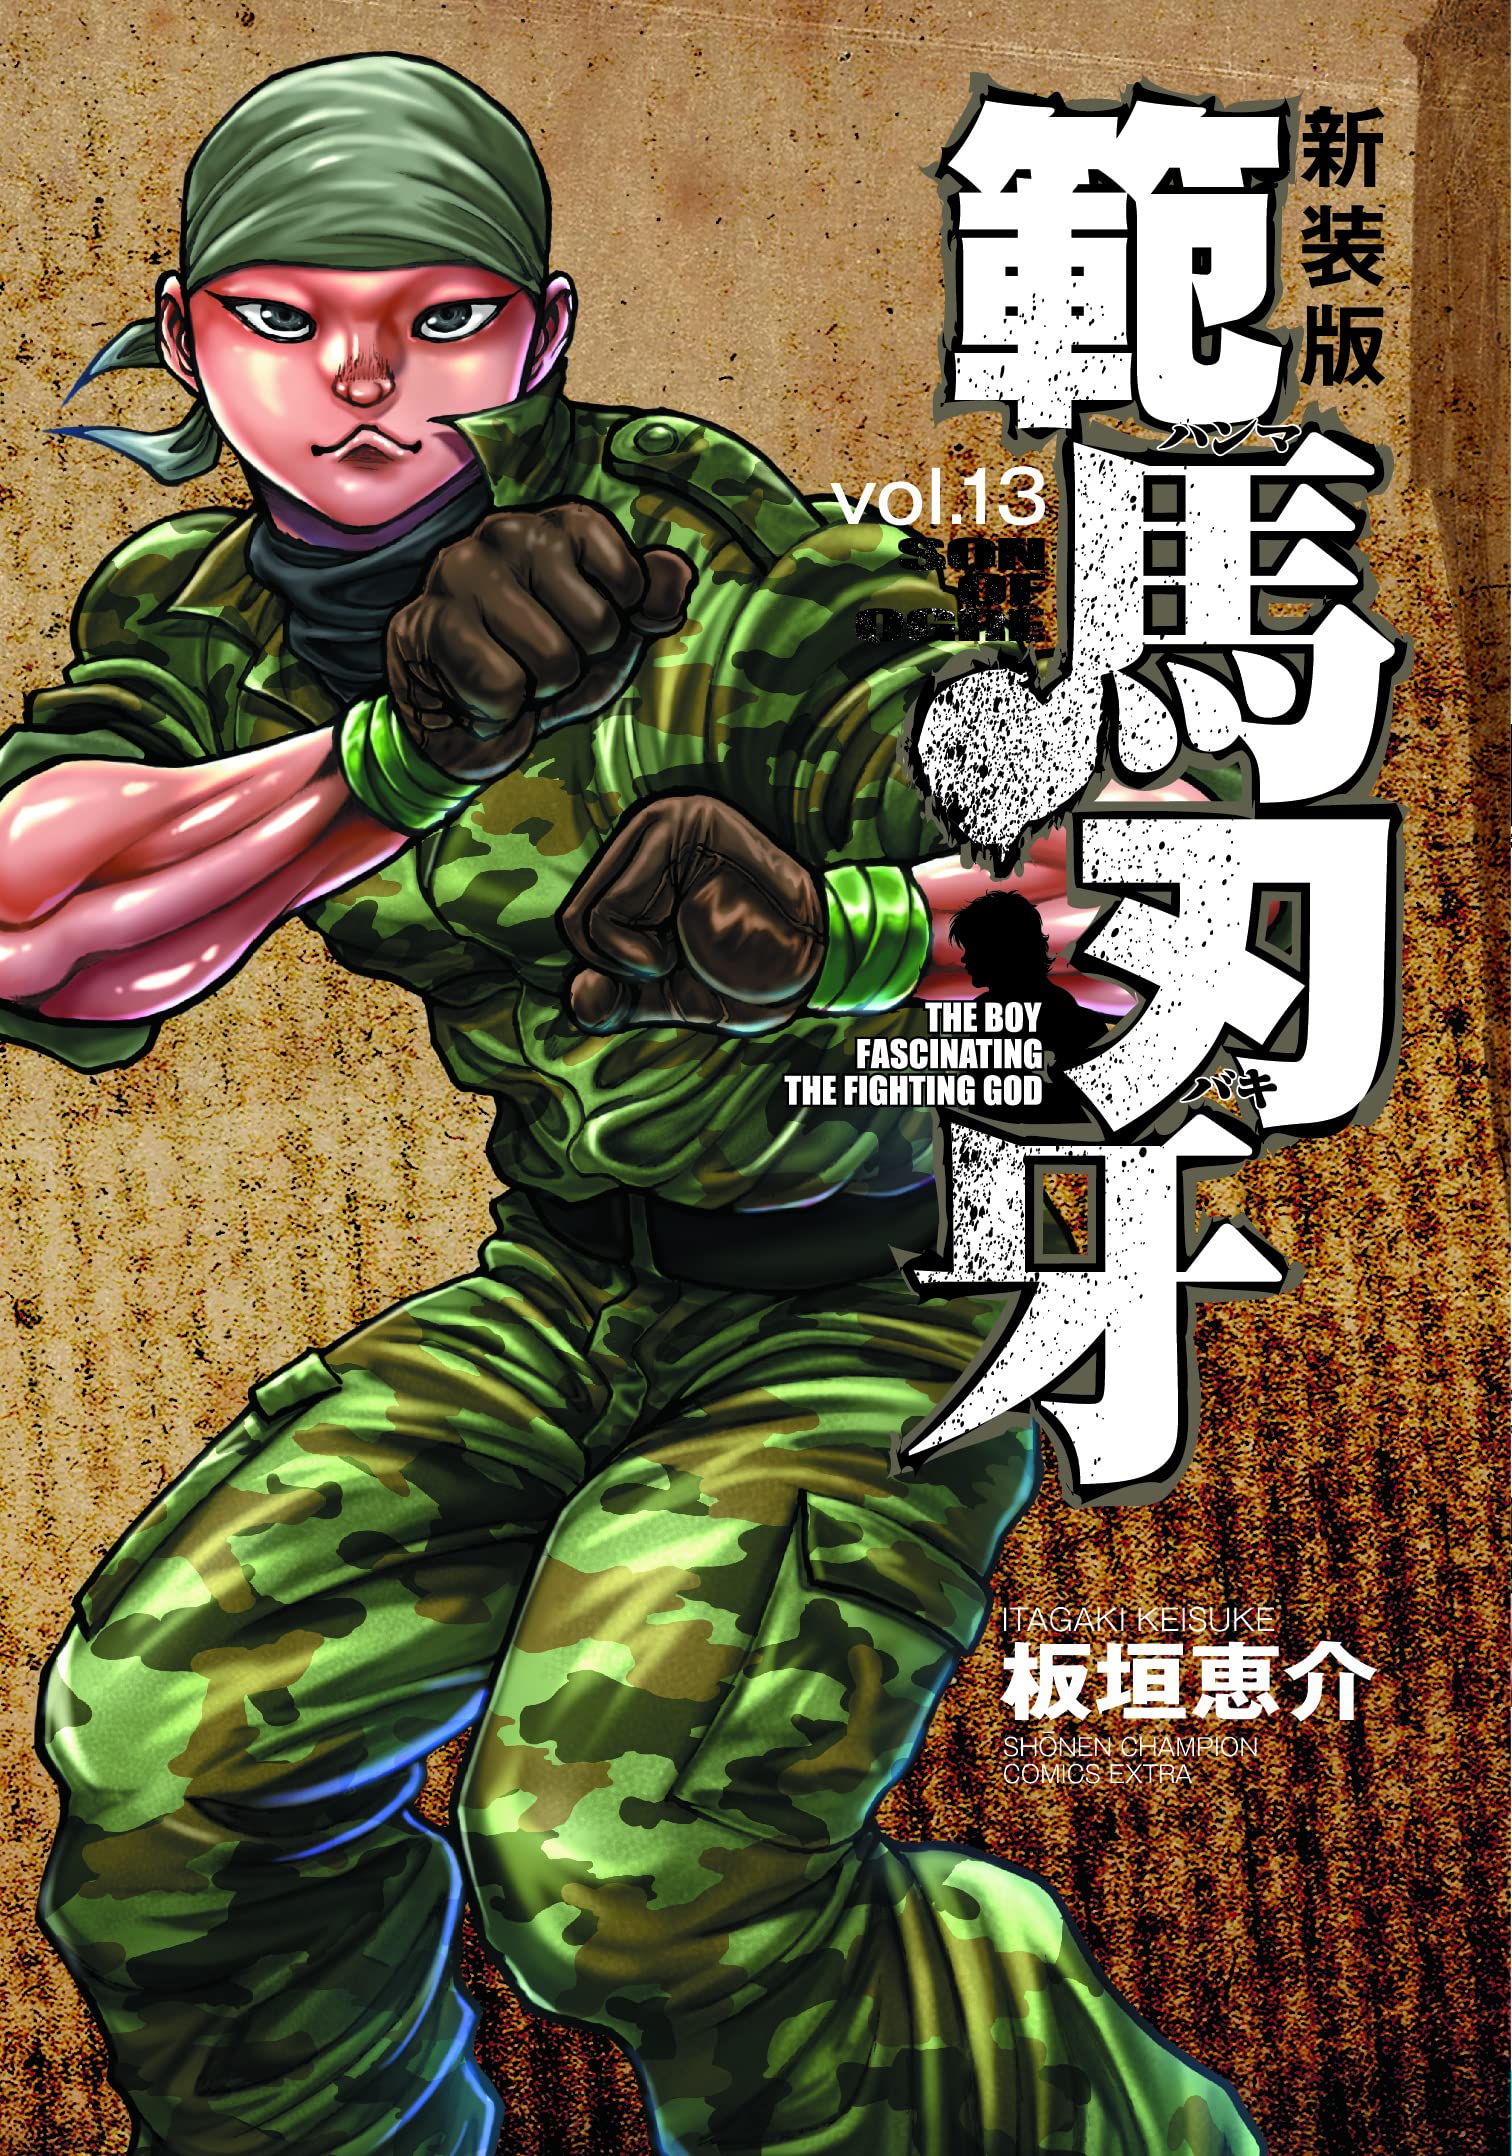 New Edition Hanma Baki: Son of Ogre 1 – Japanese Book Store